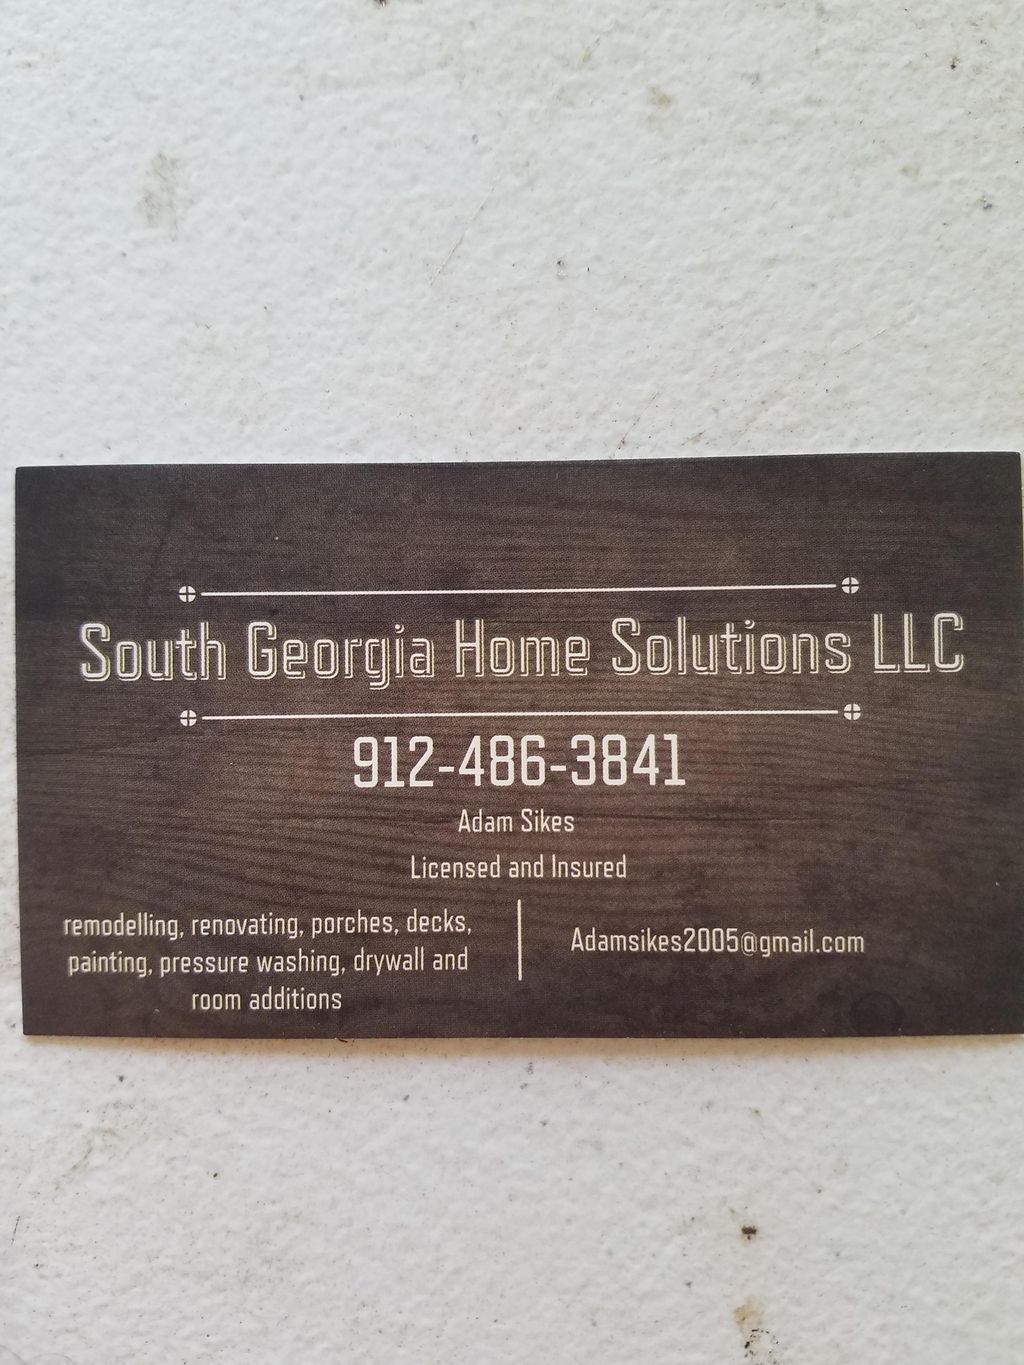 South Georgia home solutions llc